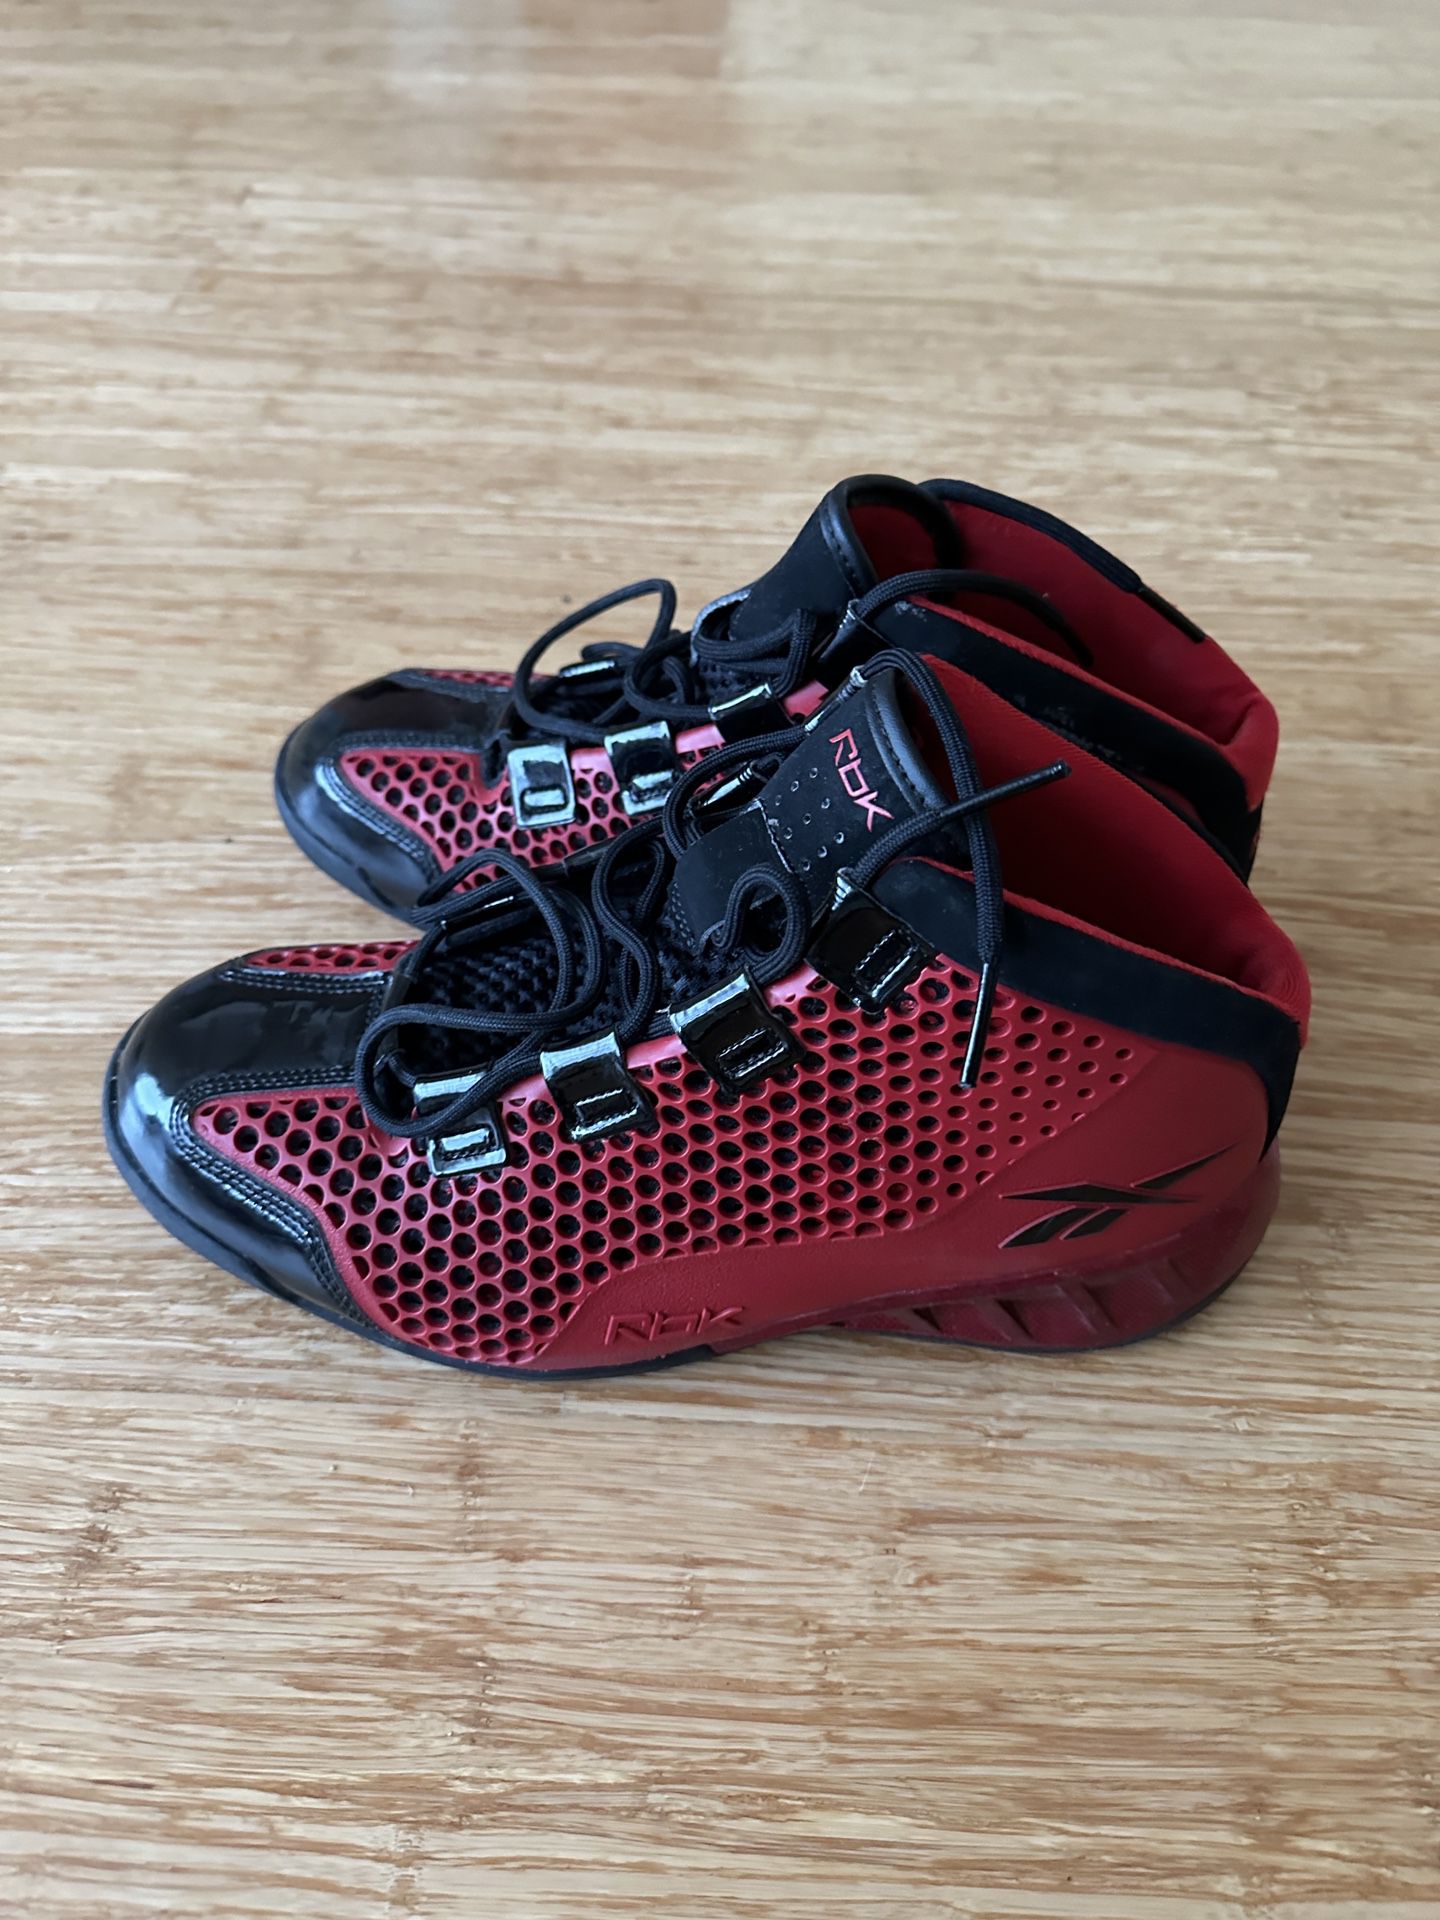 RBX Lebron VII Christmas Basketball shoes - Size 10